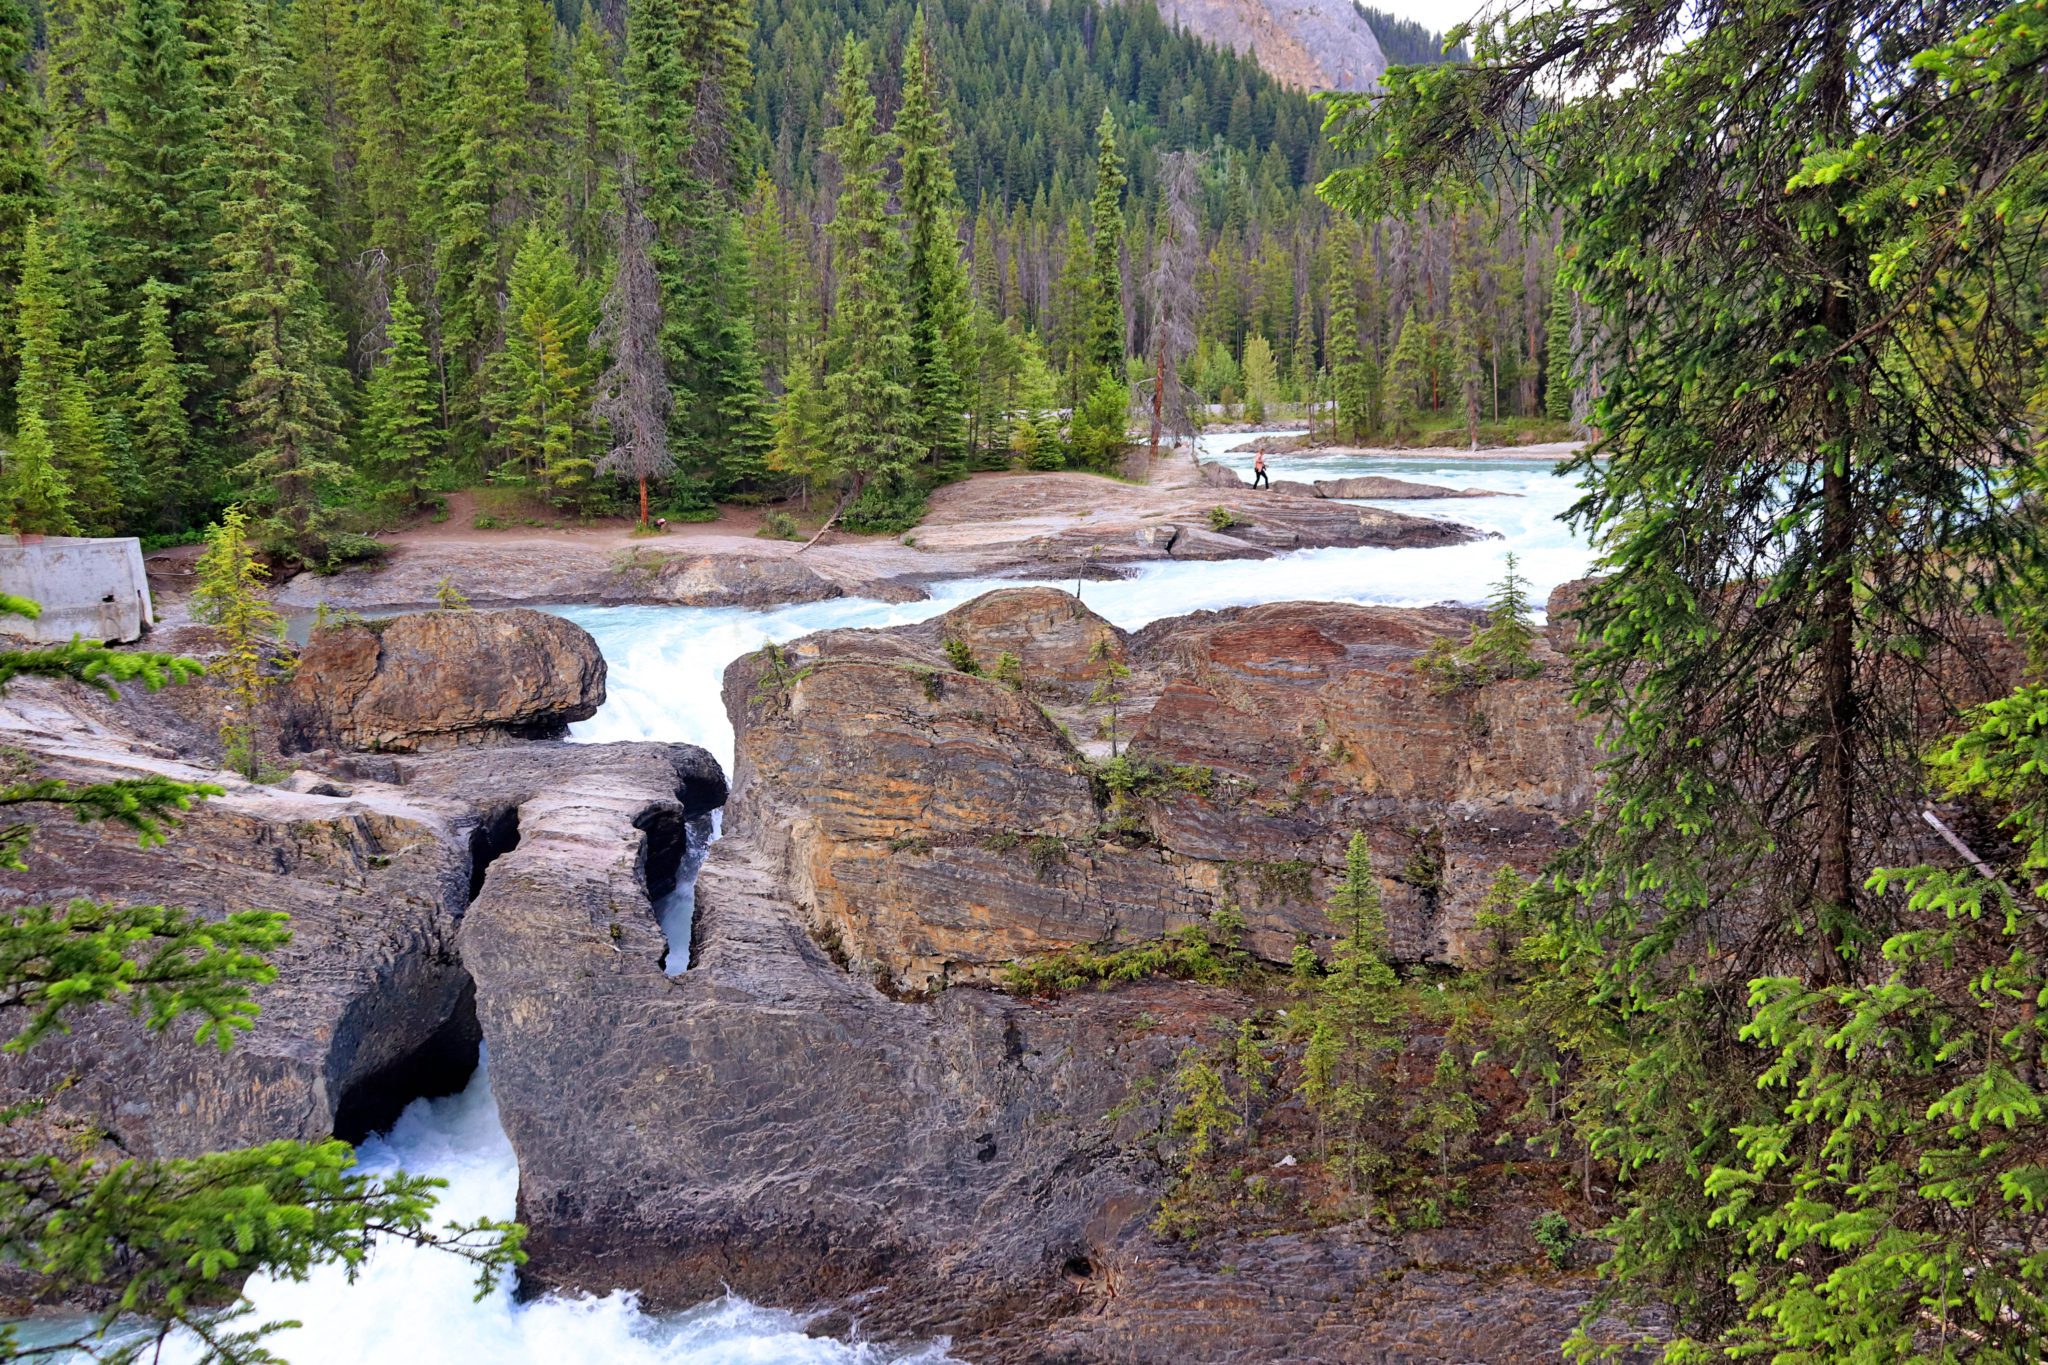  Banff Photography Guide: 15 Amazing Spots to take Photos in Banff | Natural Bridge Falls #banff #canada #simplywander #naturalbridgefalls